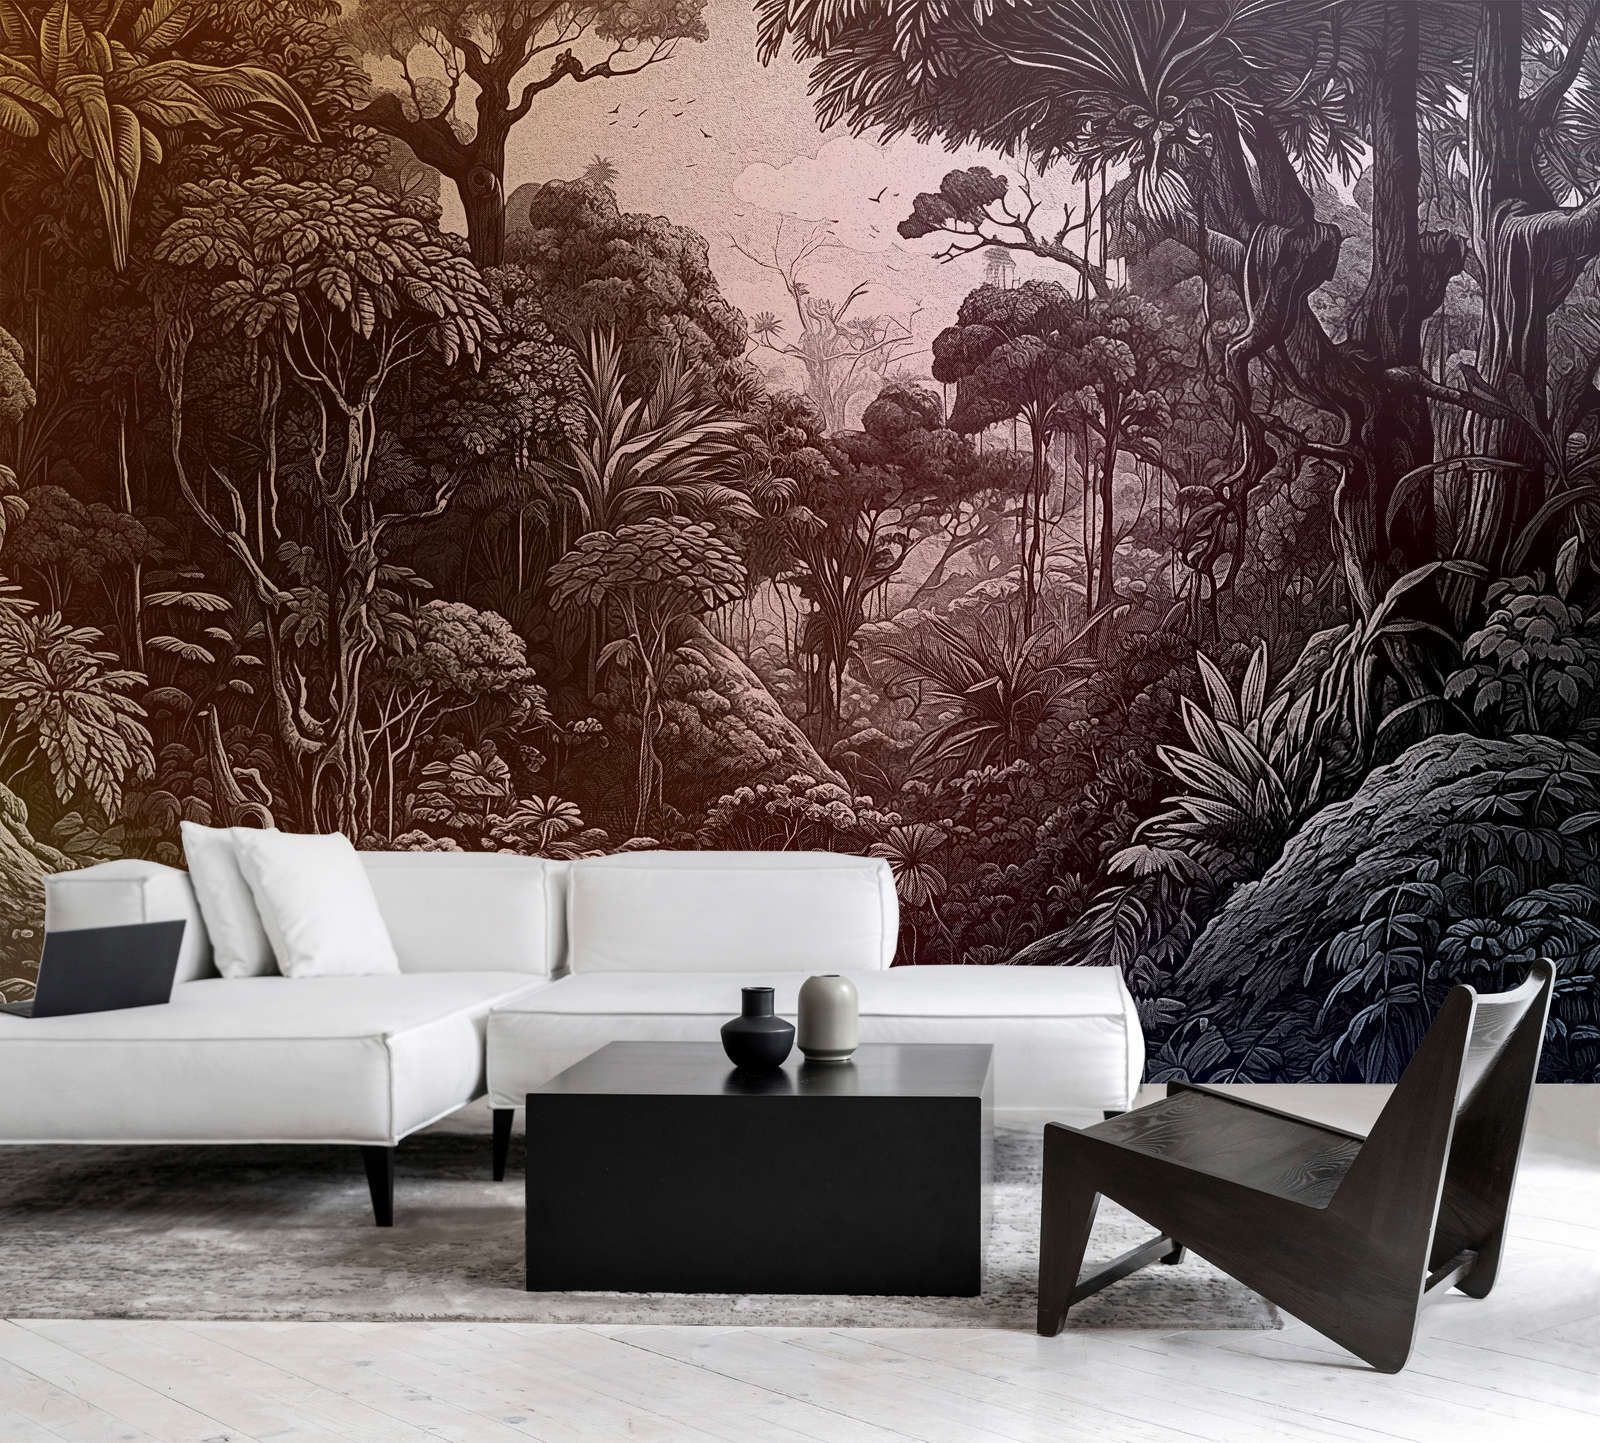             Photo wallpaper »liana« - Jungle design with colour gradient - orange, violet, grey-green | Lightly textured non-woven
        